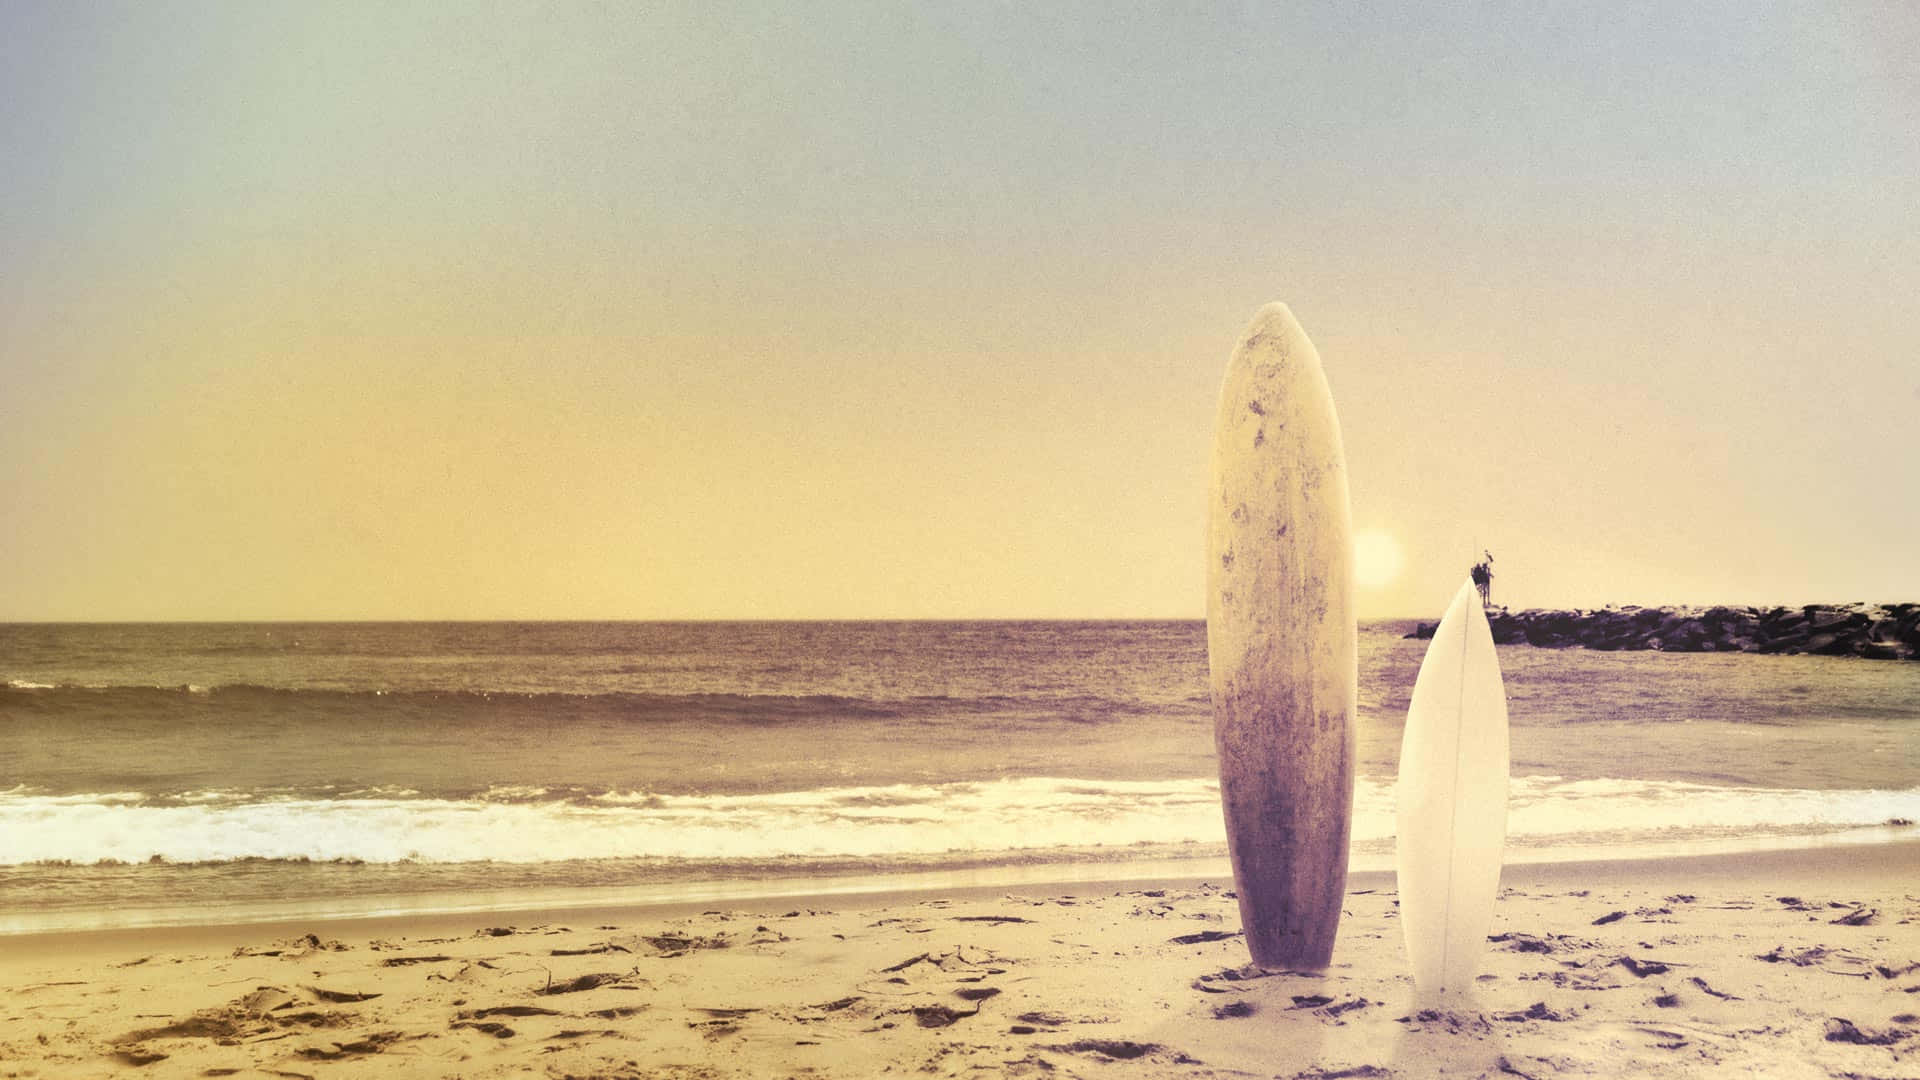  Surfen Hintergrundbild 1920x1080. Download Aesthetic Vintage Surf Wide Angle Shot Wallpaper